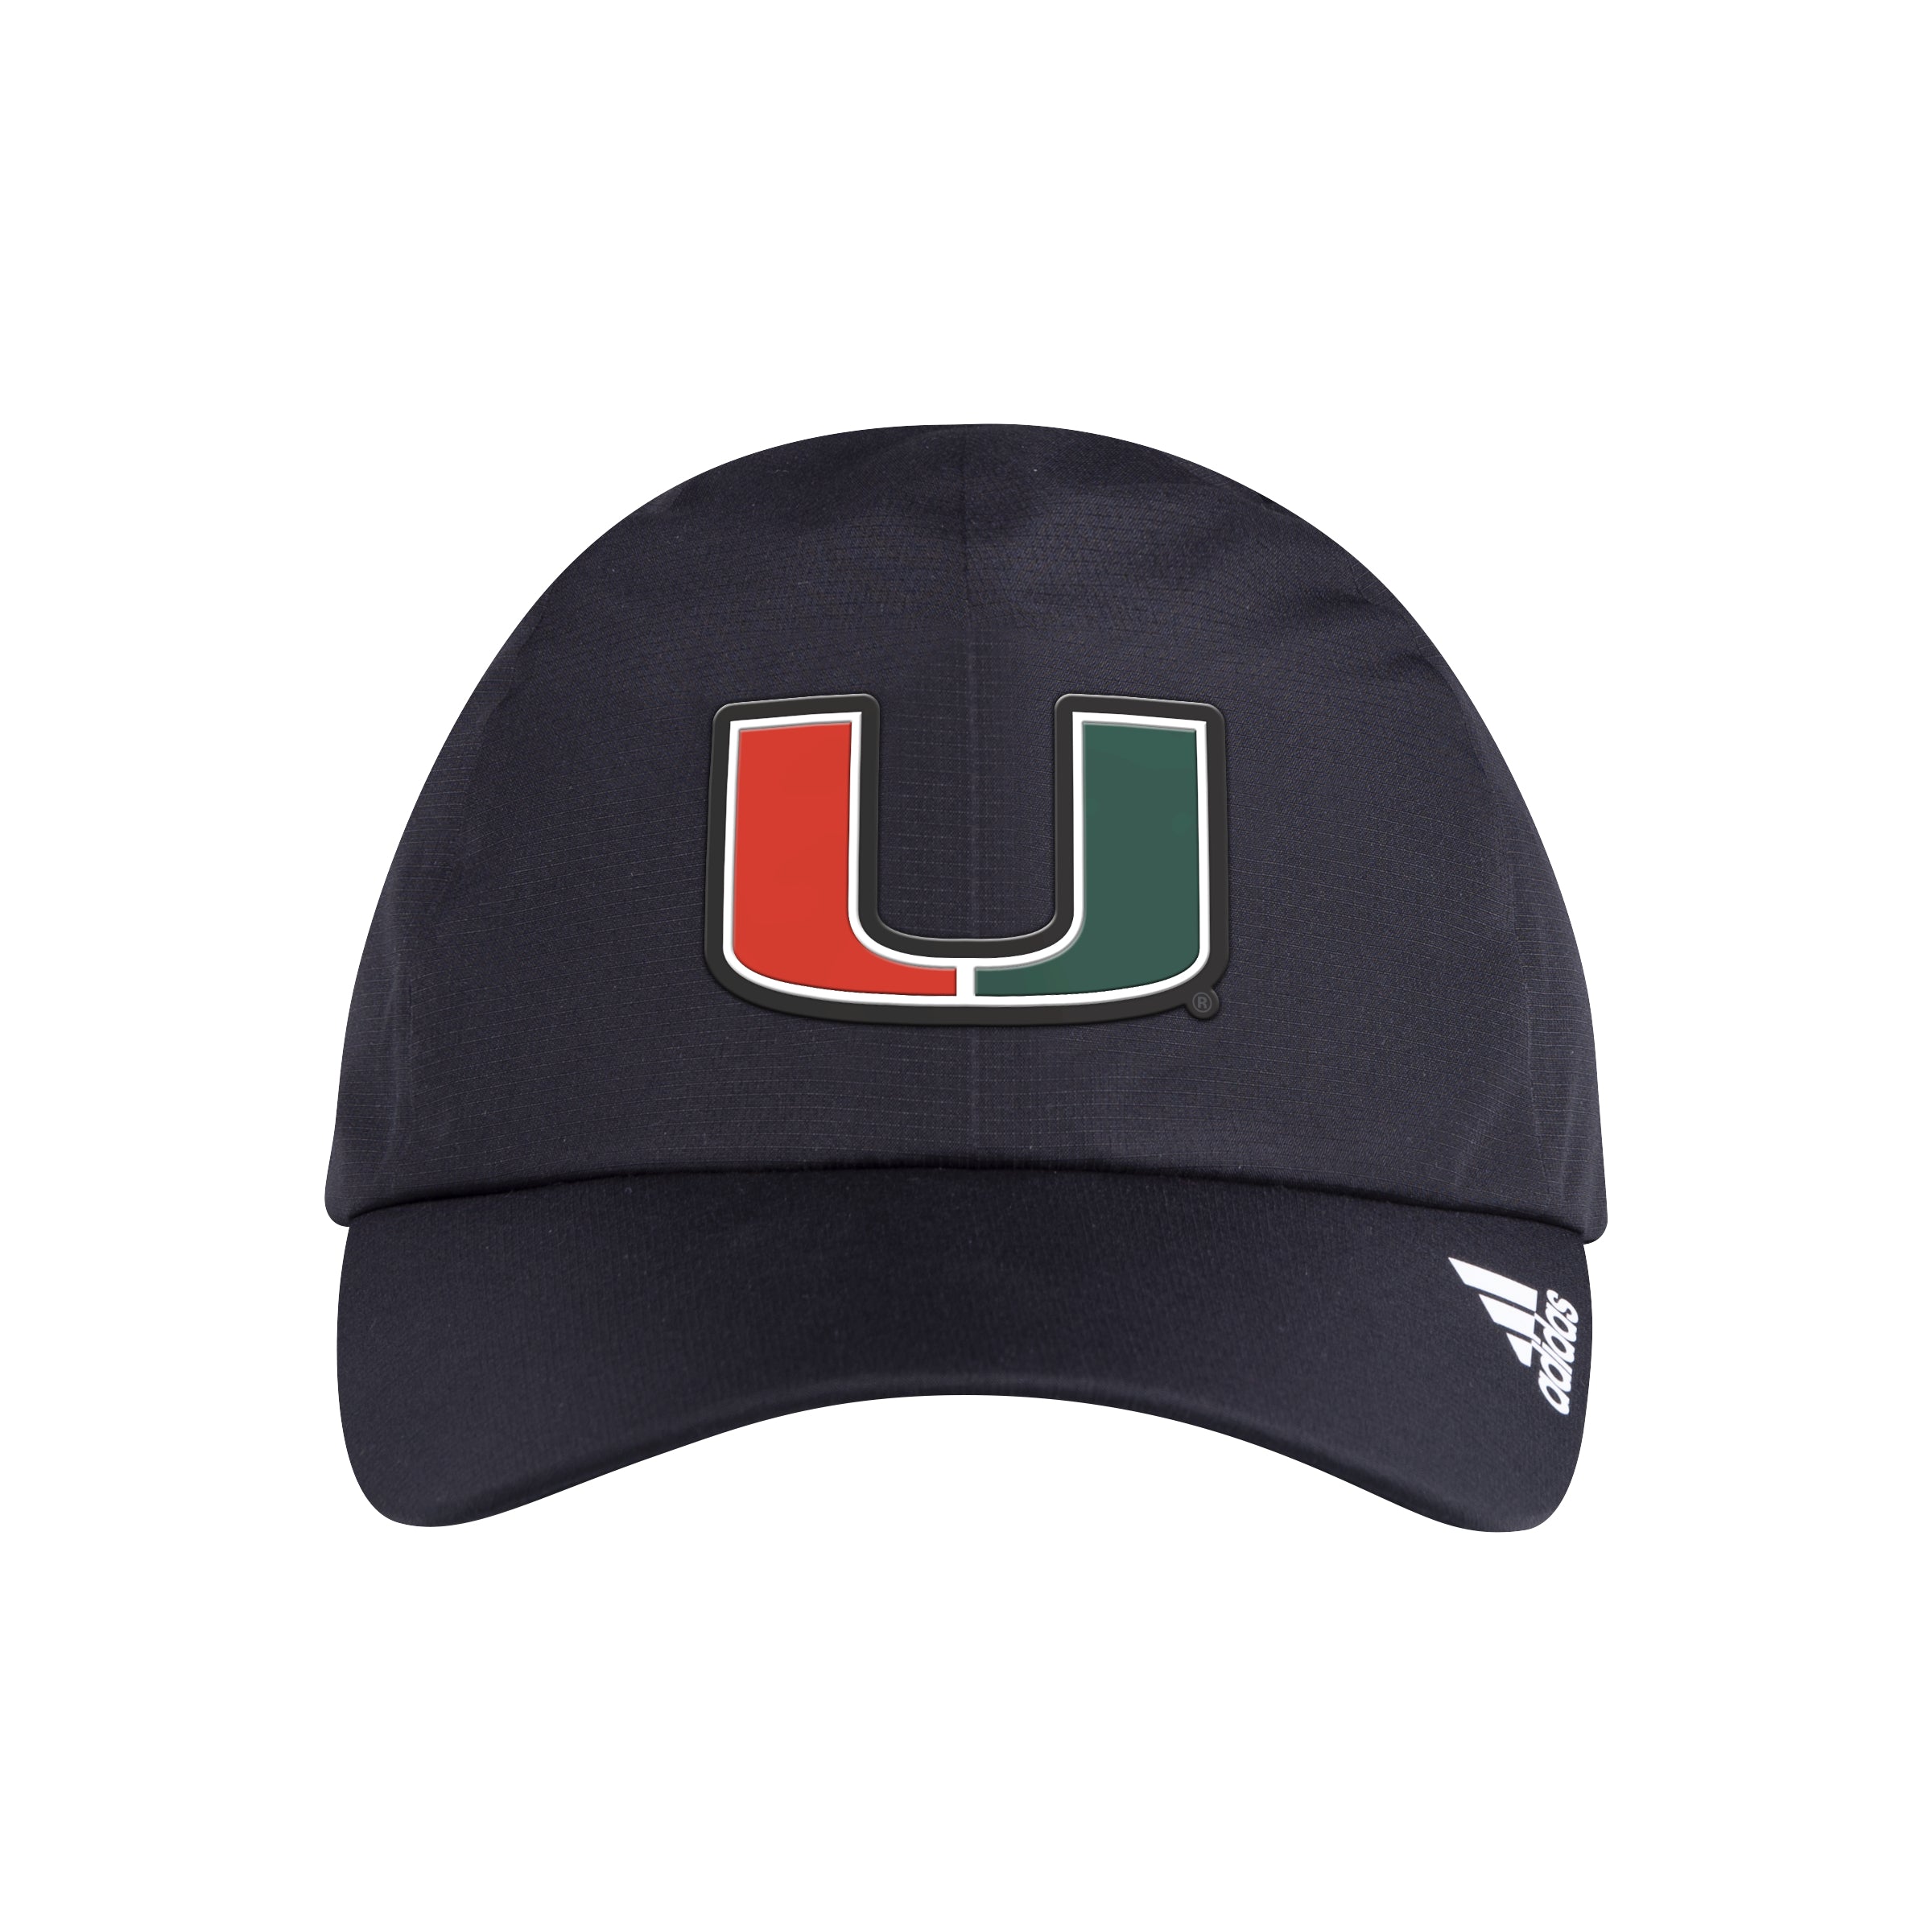 Miami Hurricanes adidas Waterproof Adjustable Hat - Black